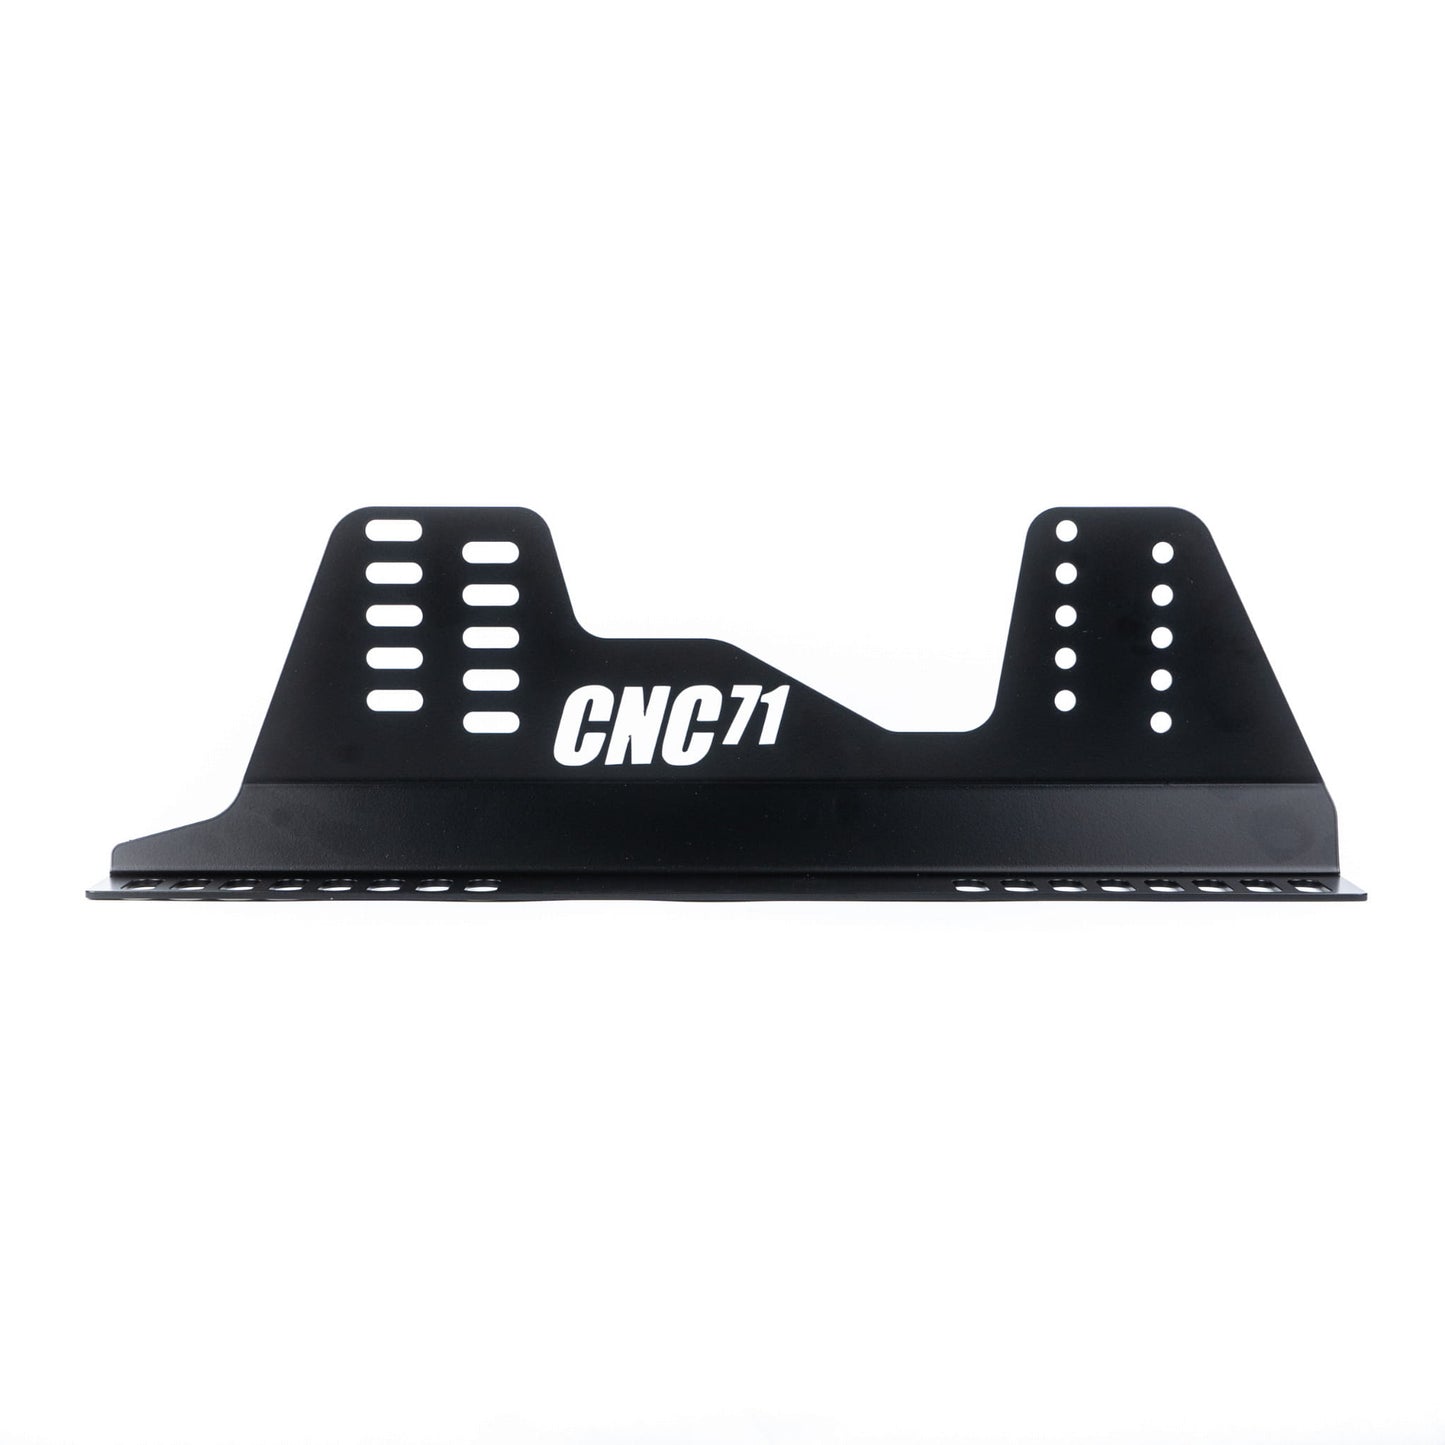 CNC71 - RACING BUCKET SEAT MOUNT BMW E36 (SIDE)